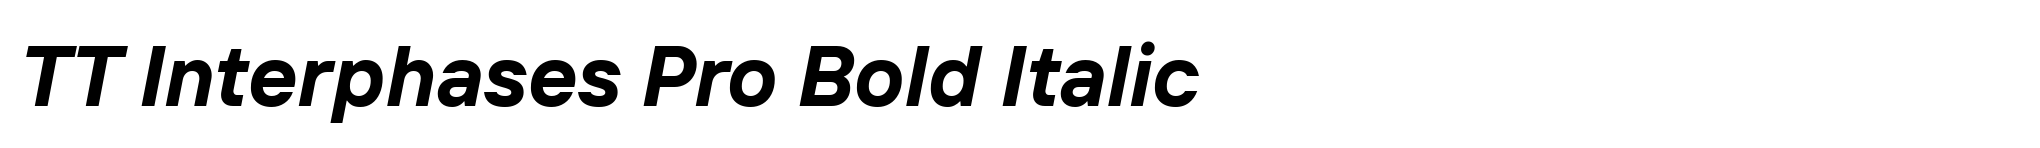 TT Interphases Pro Bold Italic image